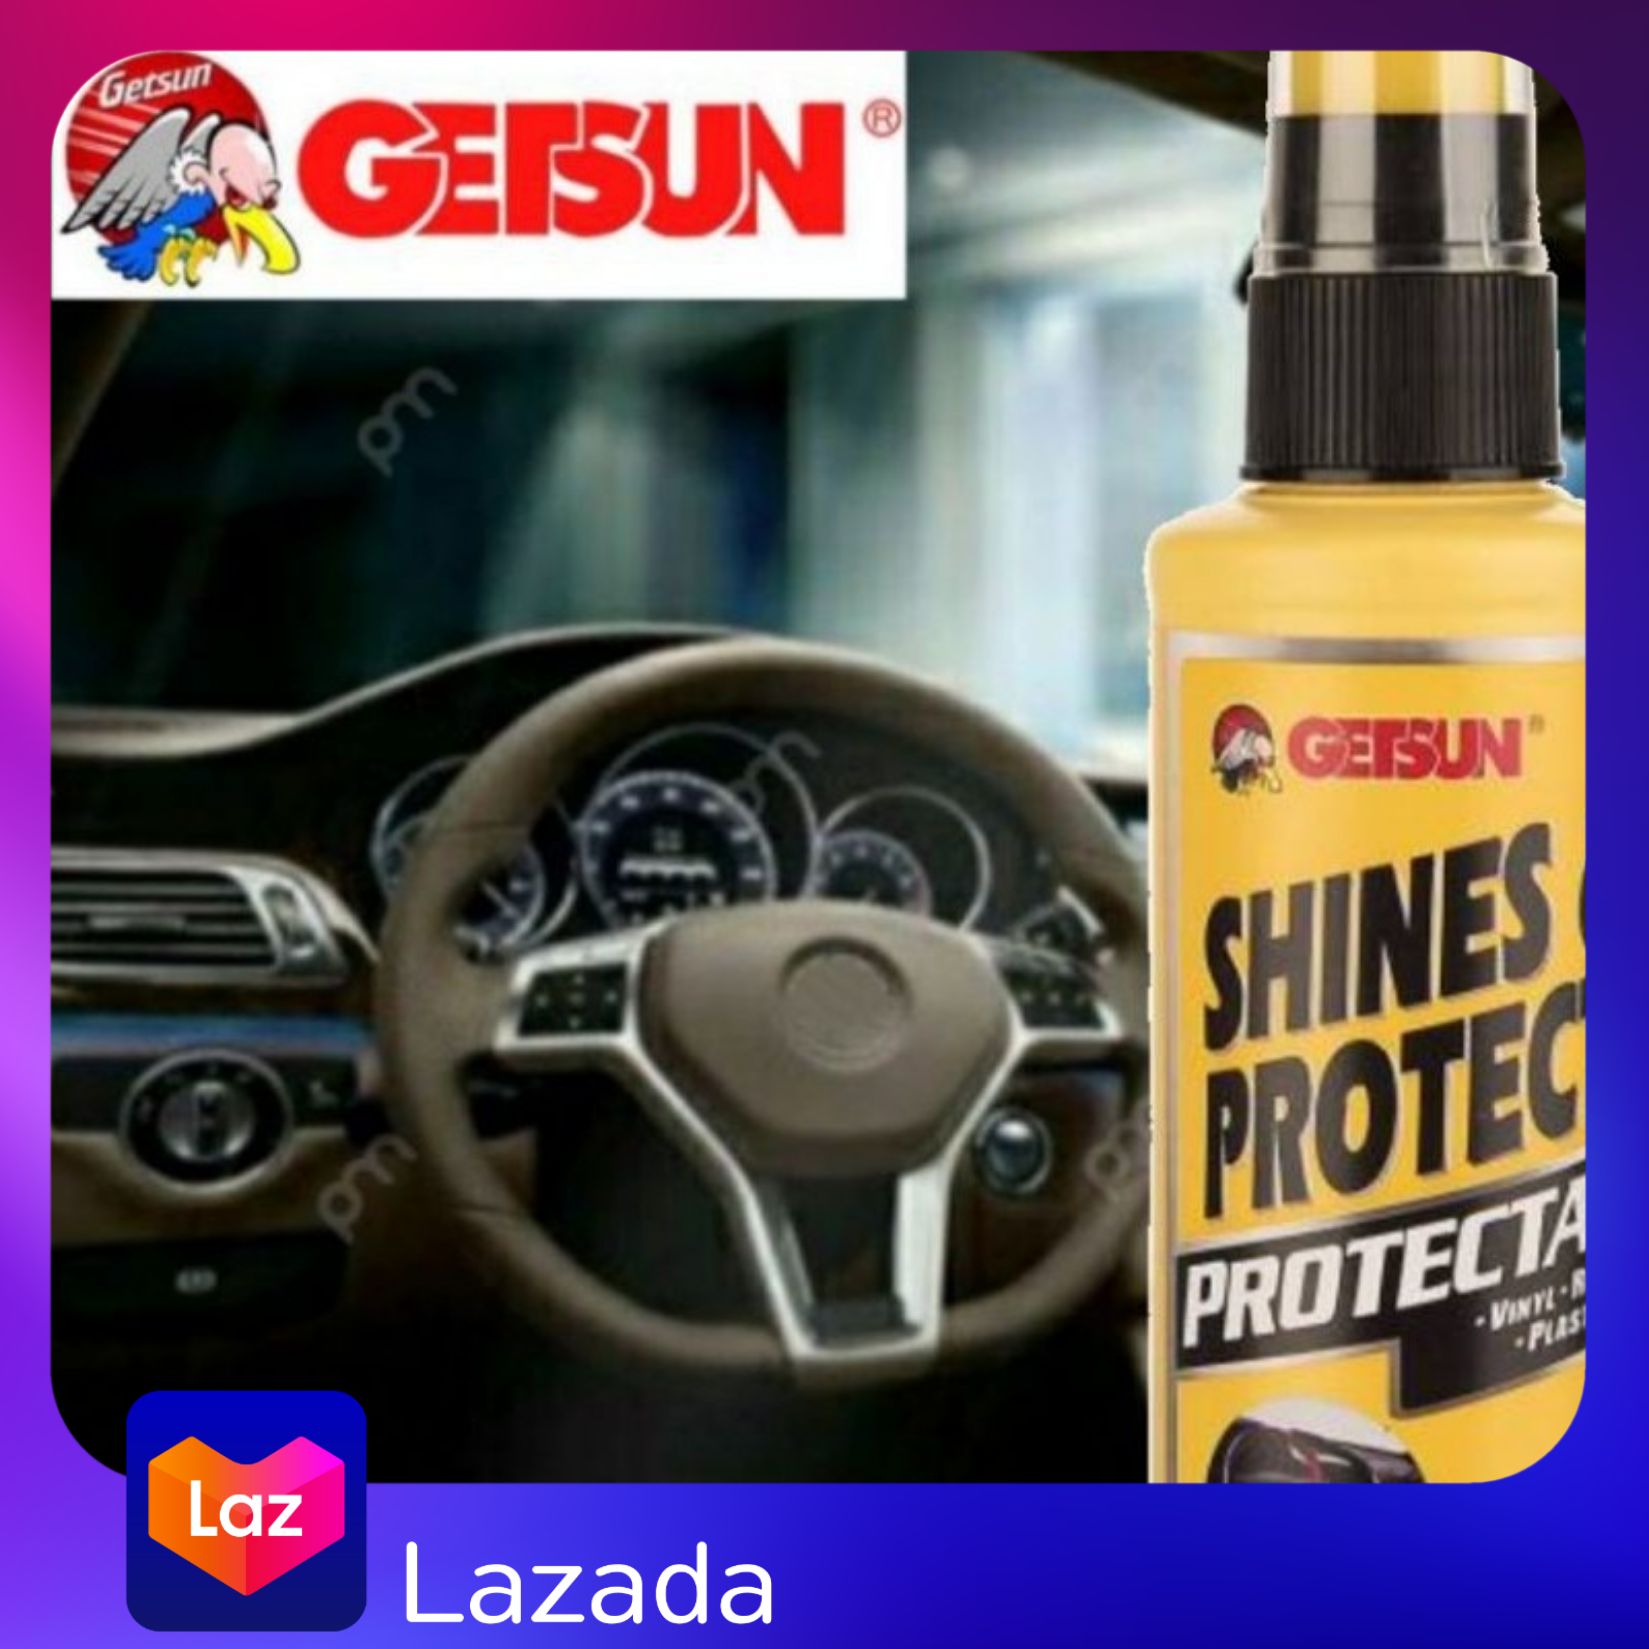 Getsun Shine & Protects สเปรย์เคลือบเงา คอนโซล แผงประตู และปกป้องชิ้นส่วนพลาสติก เพิ่มความเงางามให้กับภายในห้องโดยสาร (118 ml.)